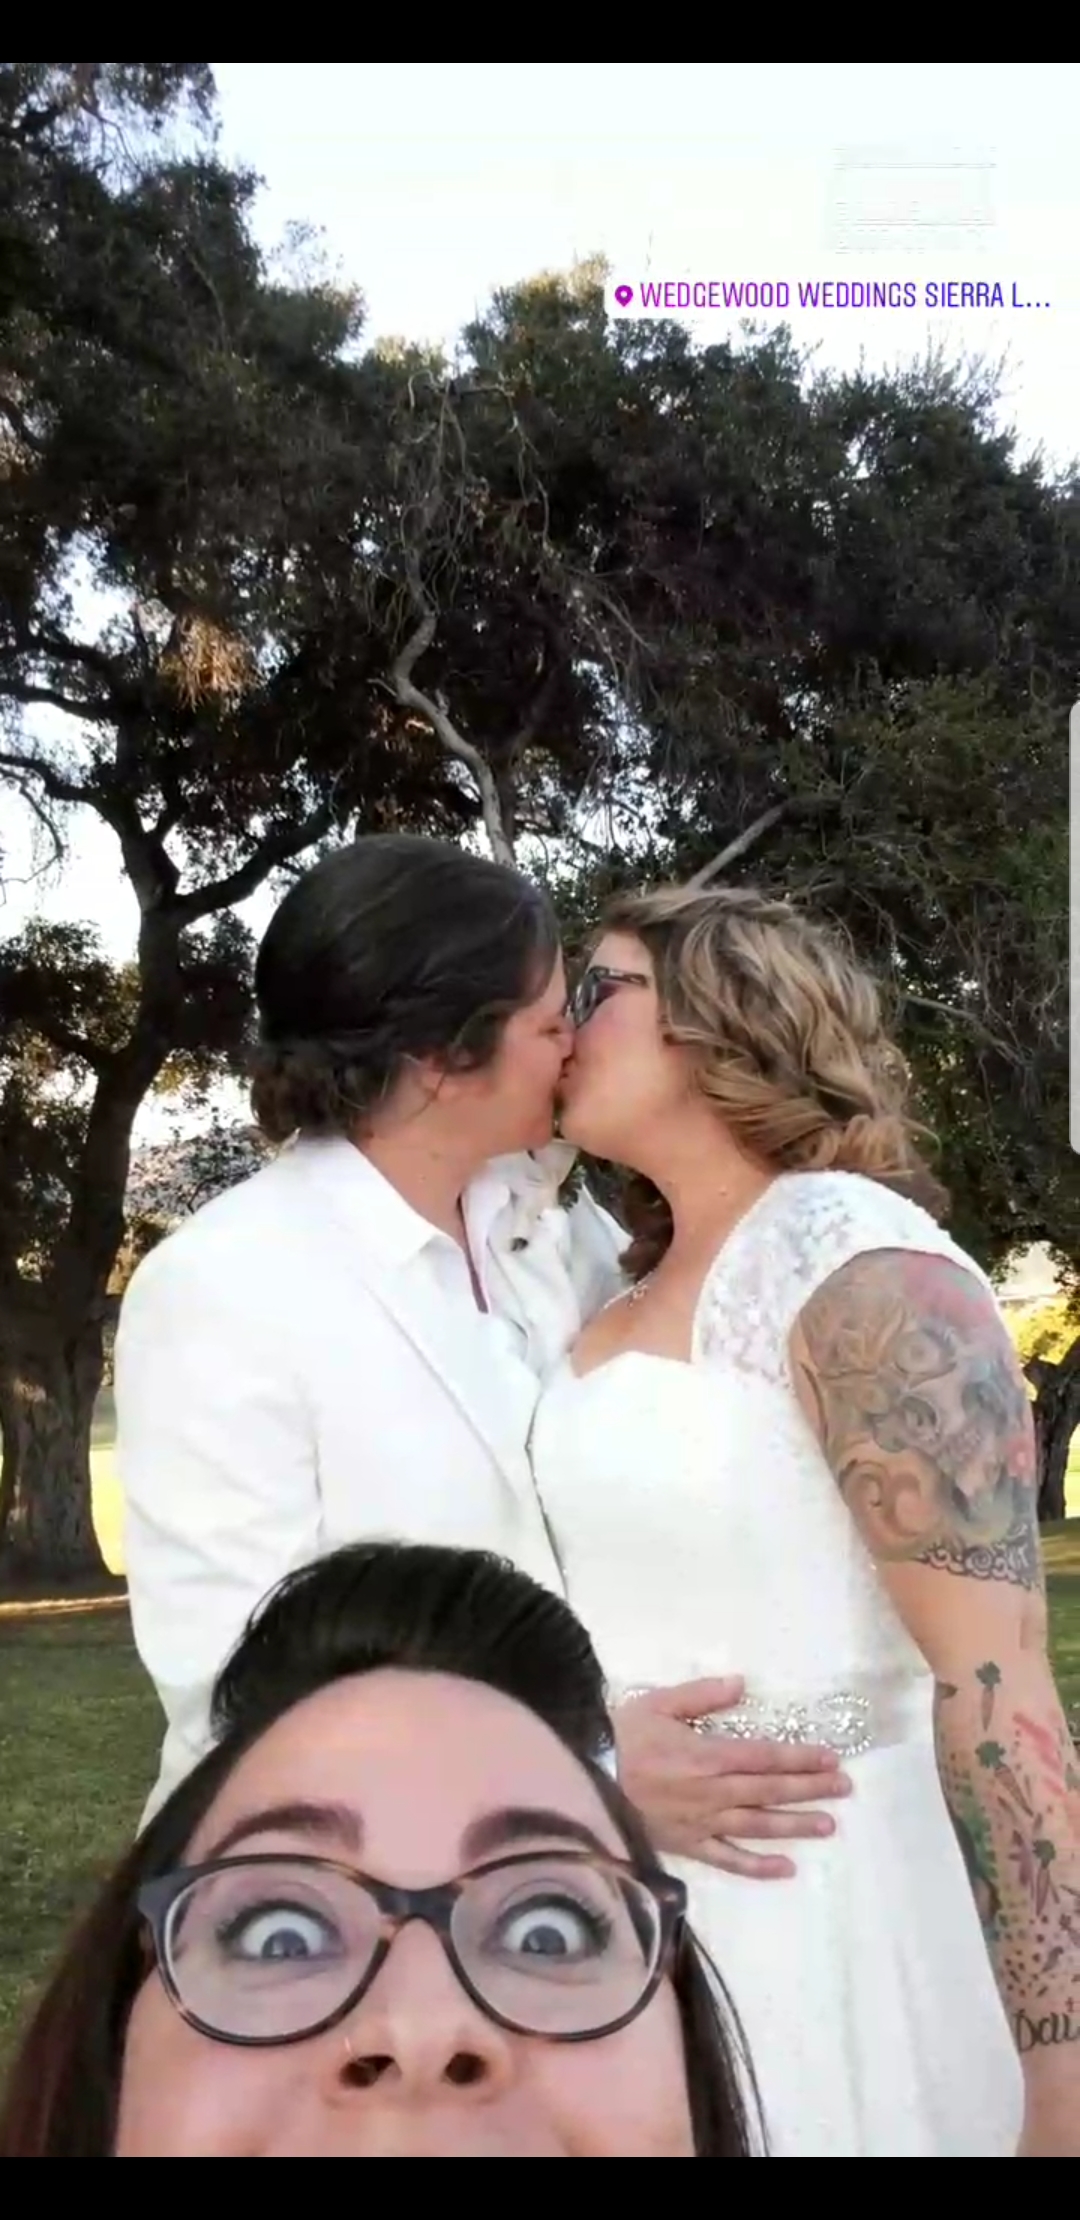 LGBTQ wedding officiant offbeat bride tattooed bride